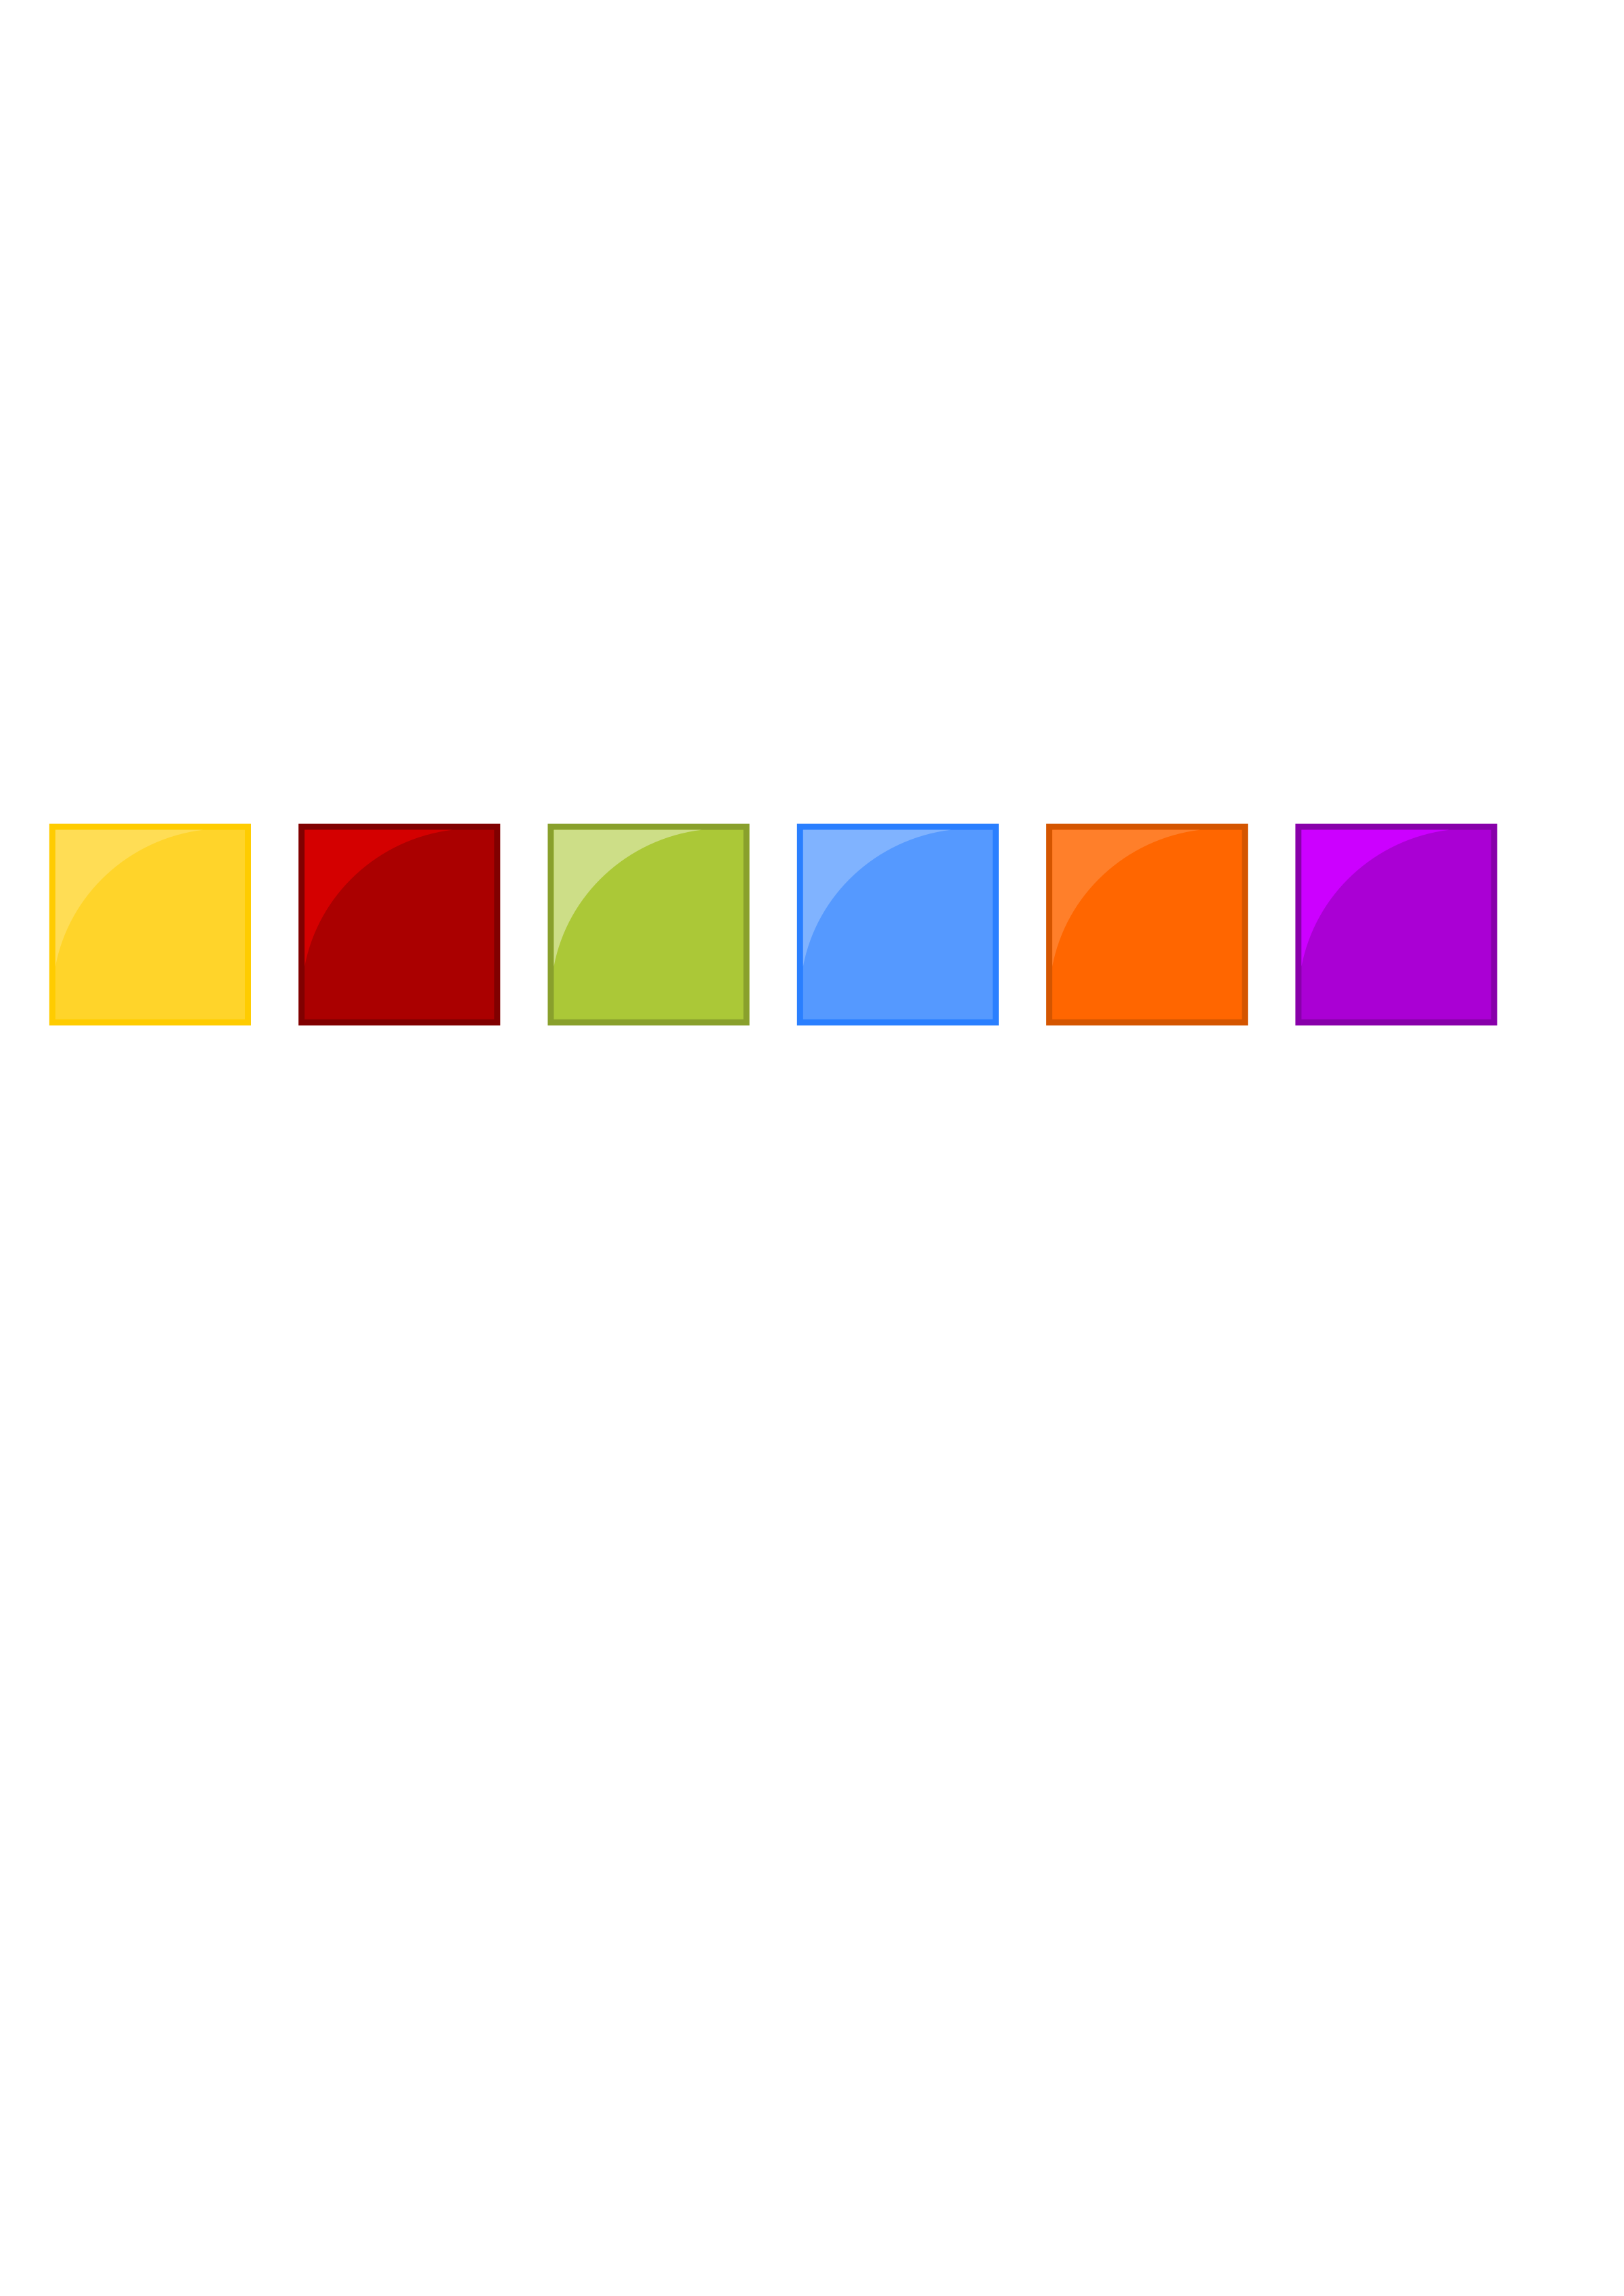 Colorful Square Icon Backgrounds SVG Clip arts